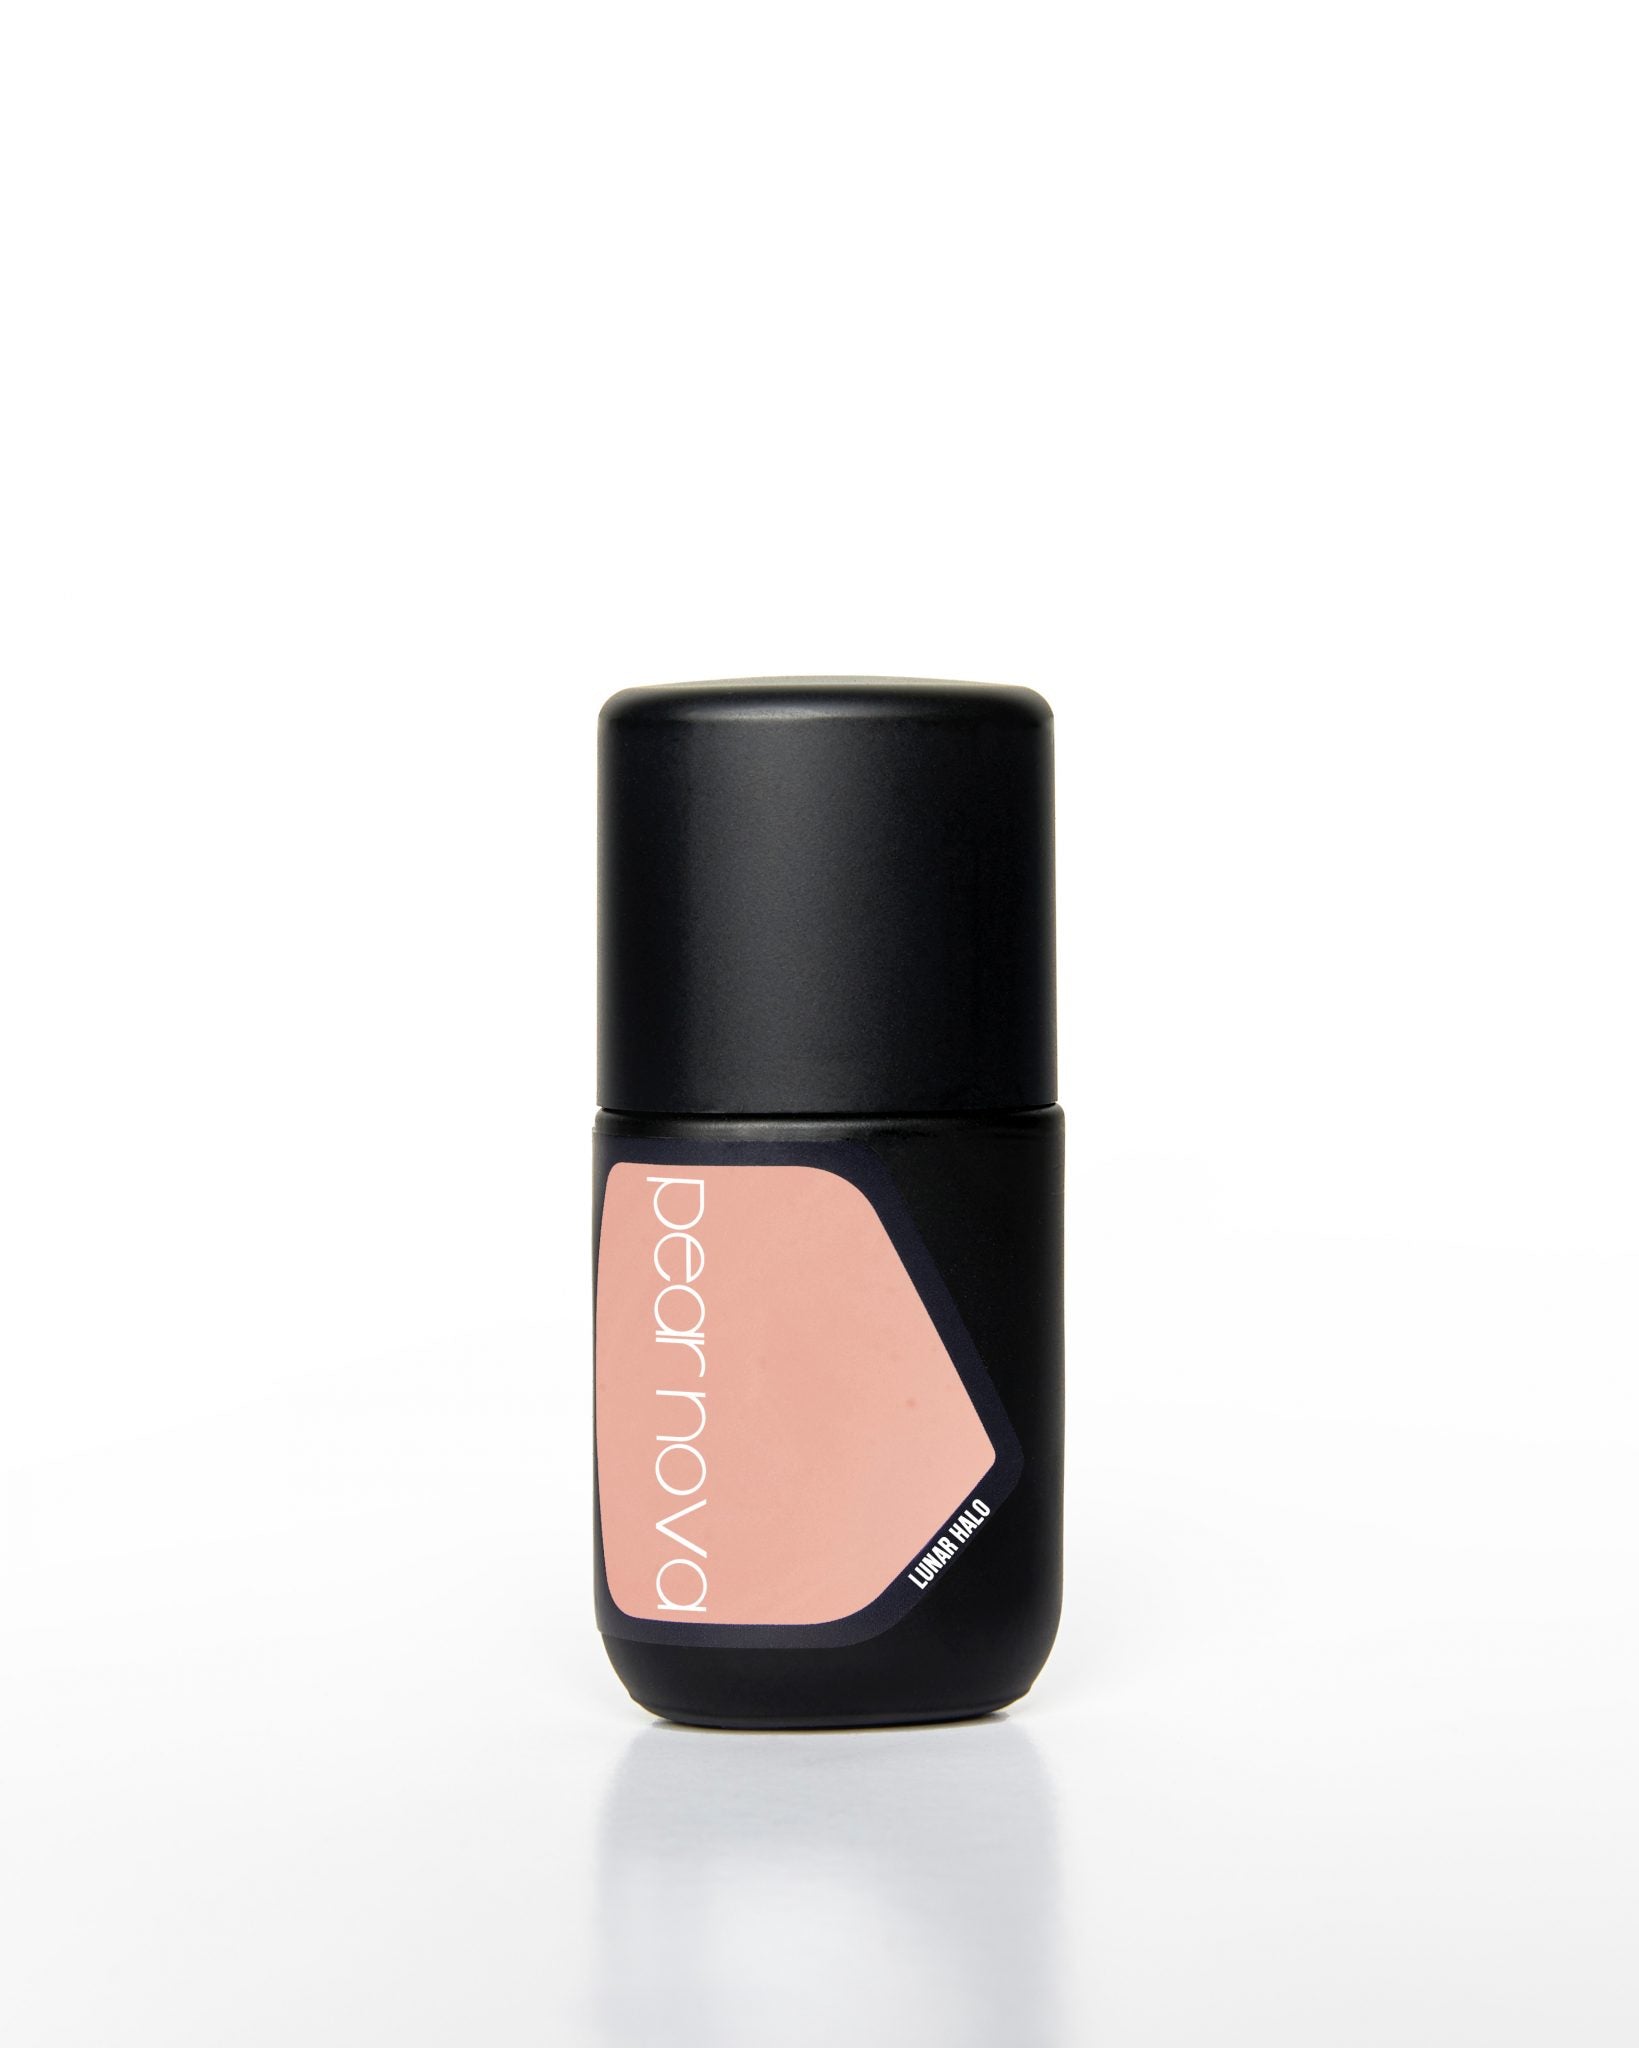 bottle of Lunar Halo Gel nail polish